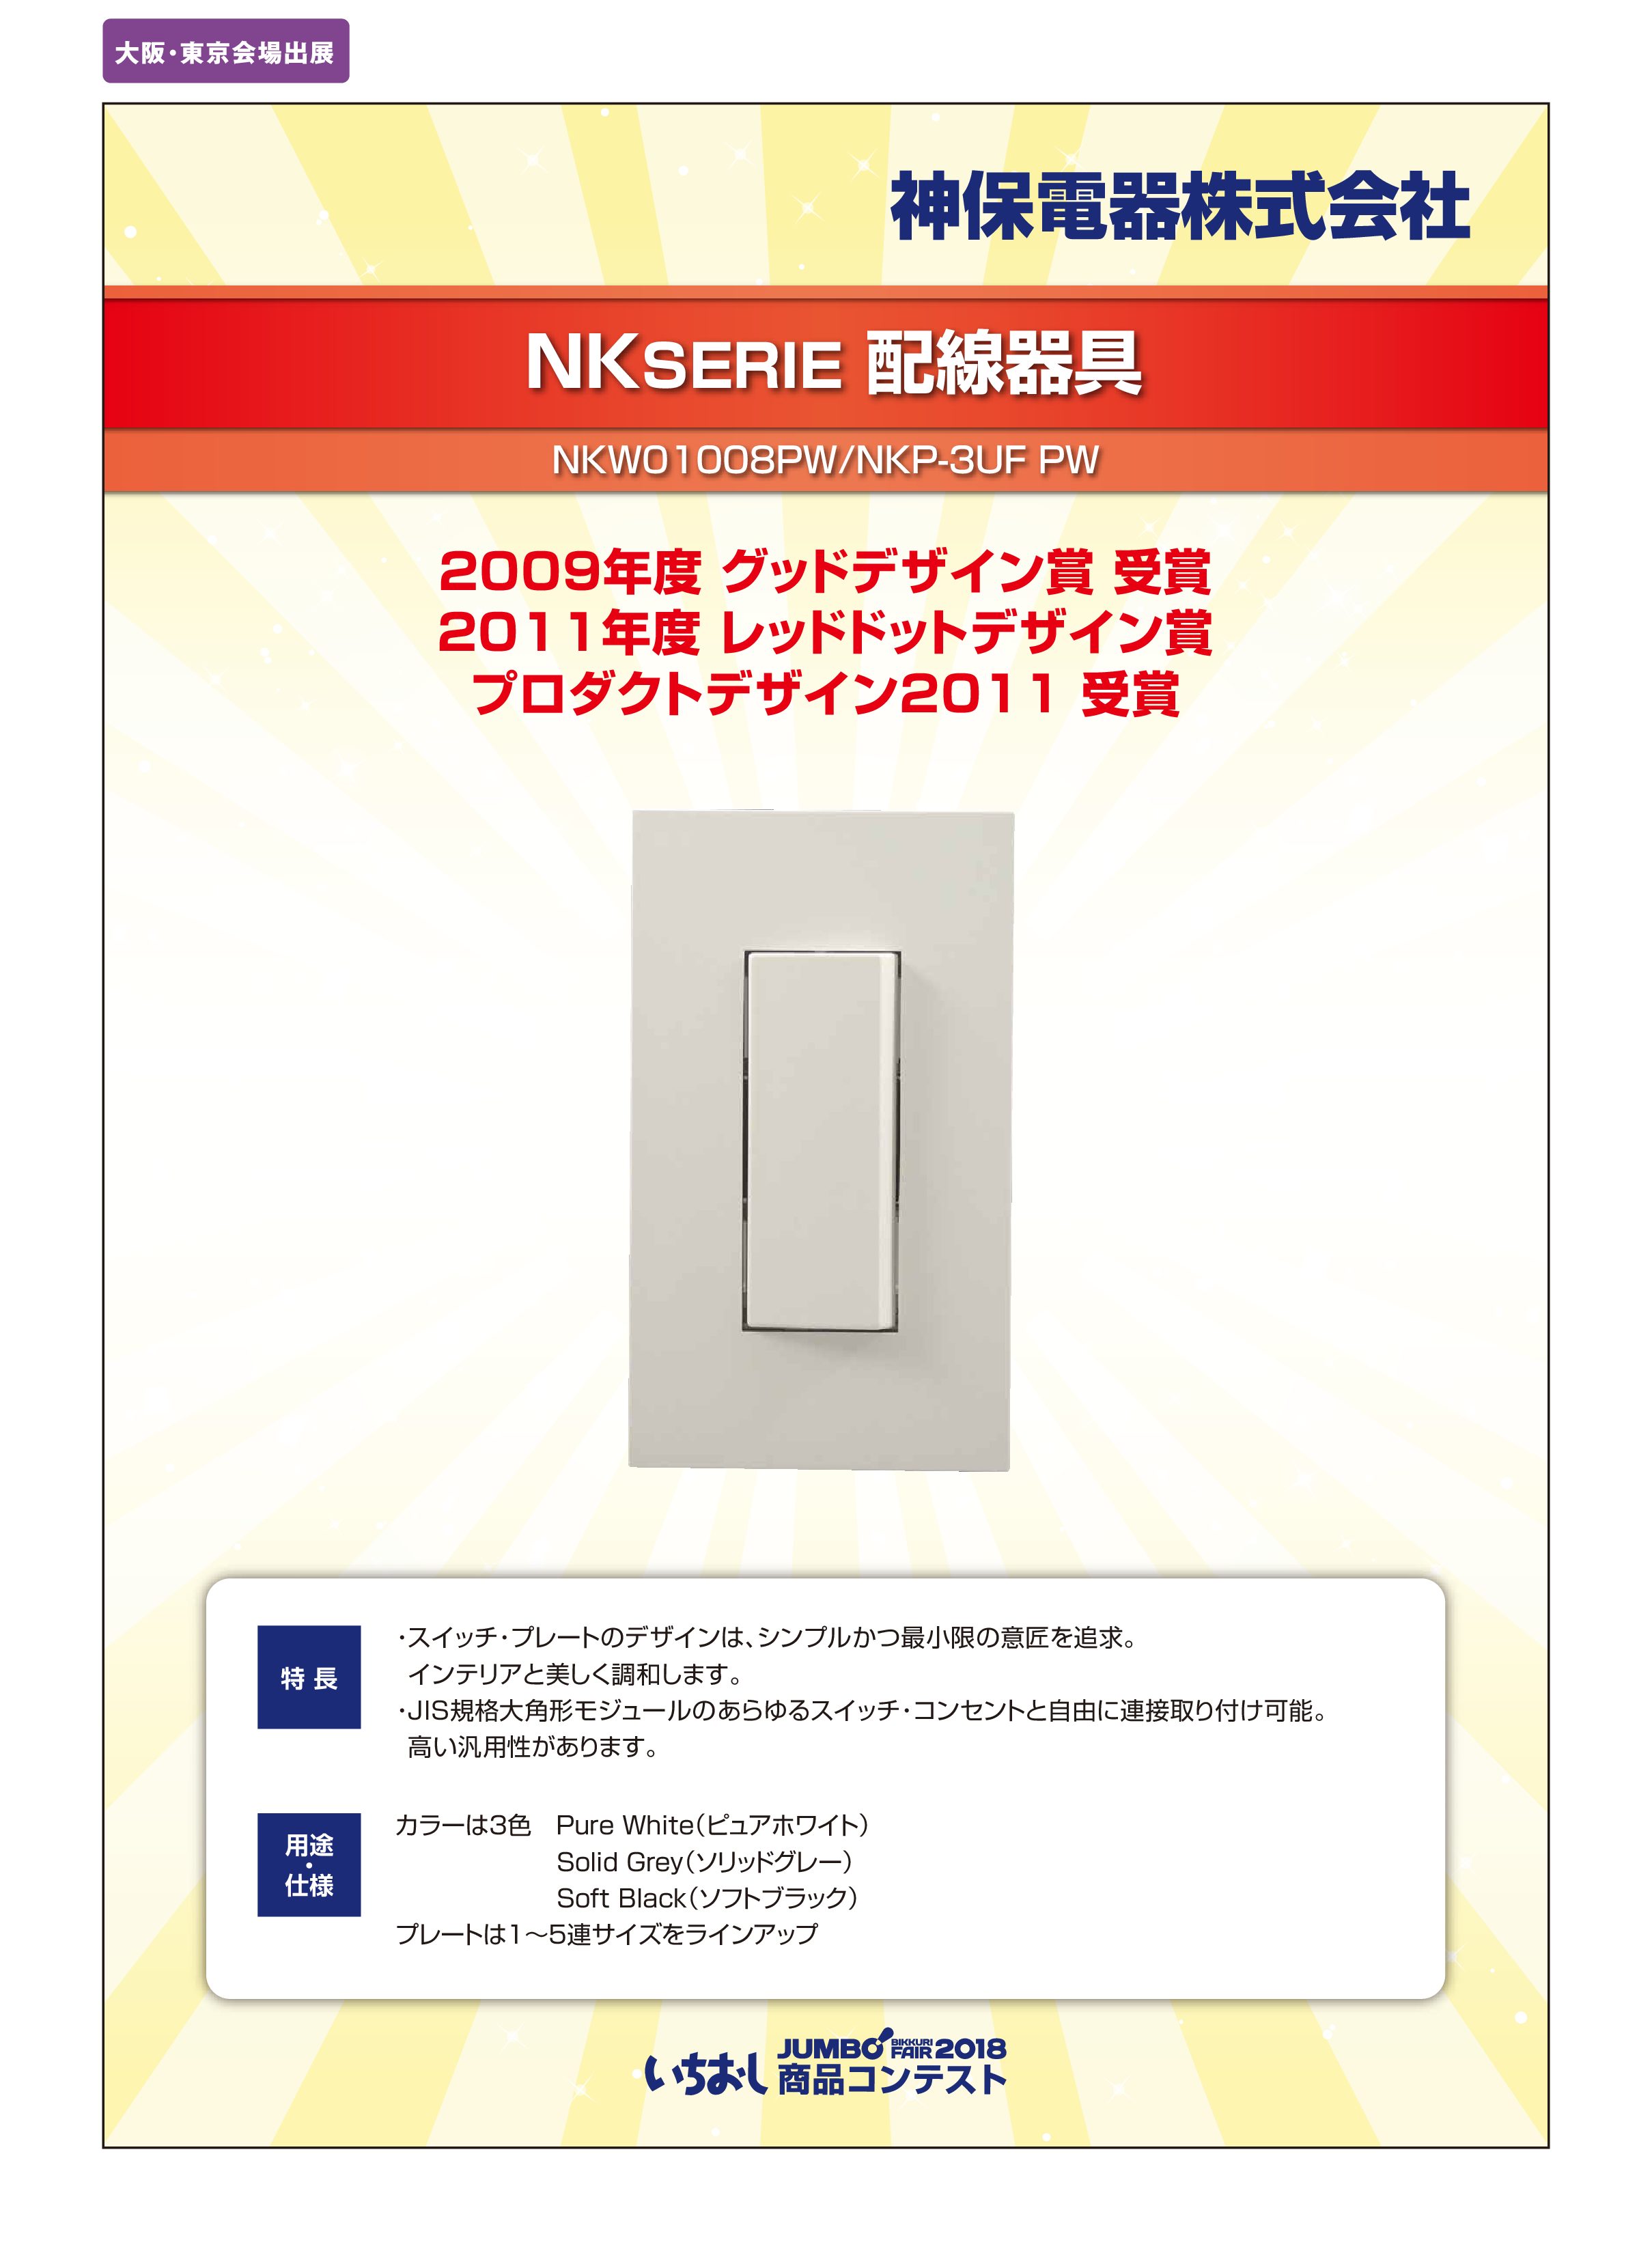 「NKSERIE 配線器具」神保電器株式会社の画像